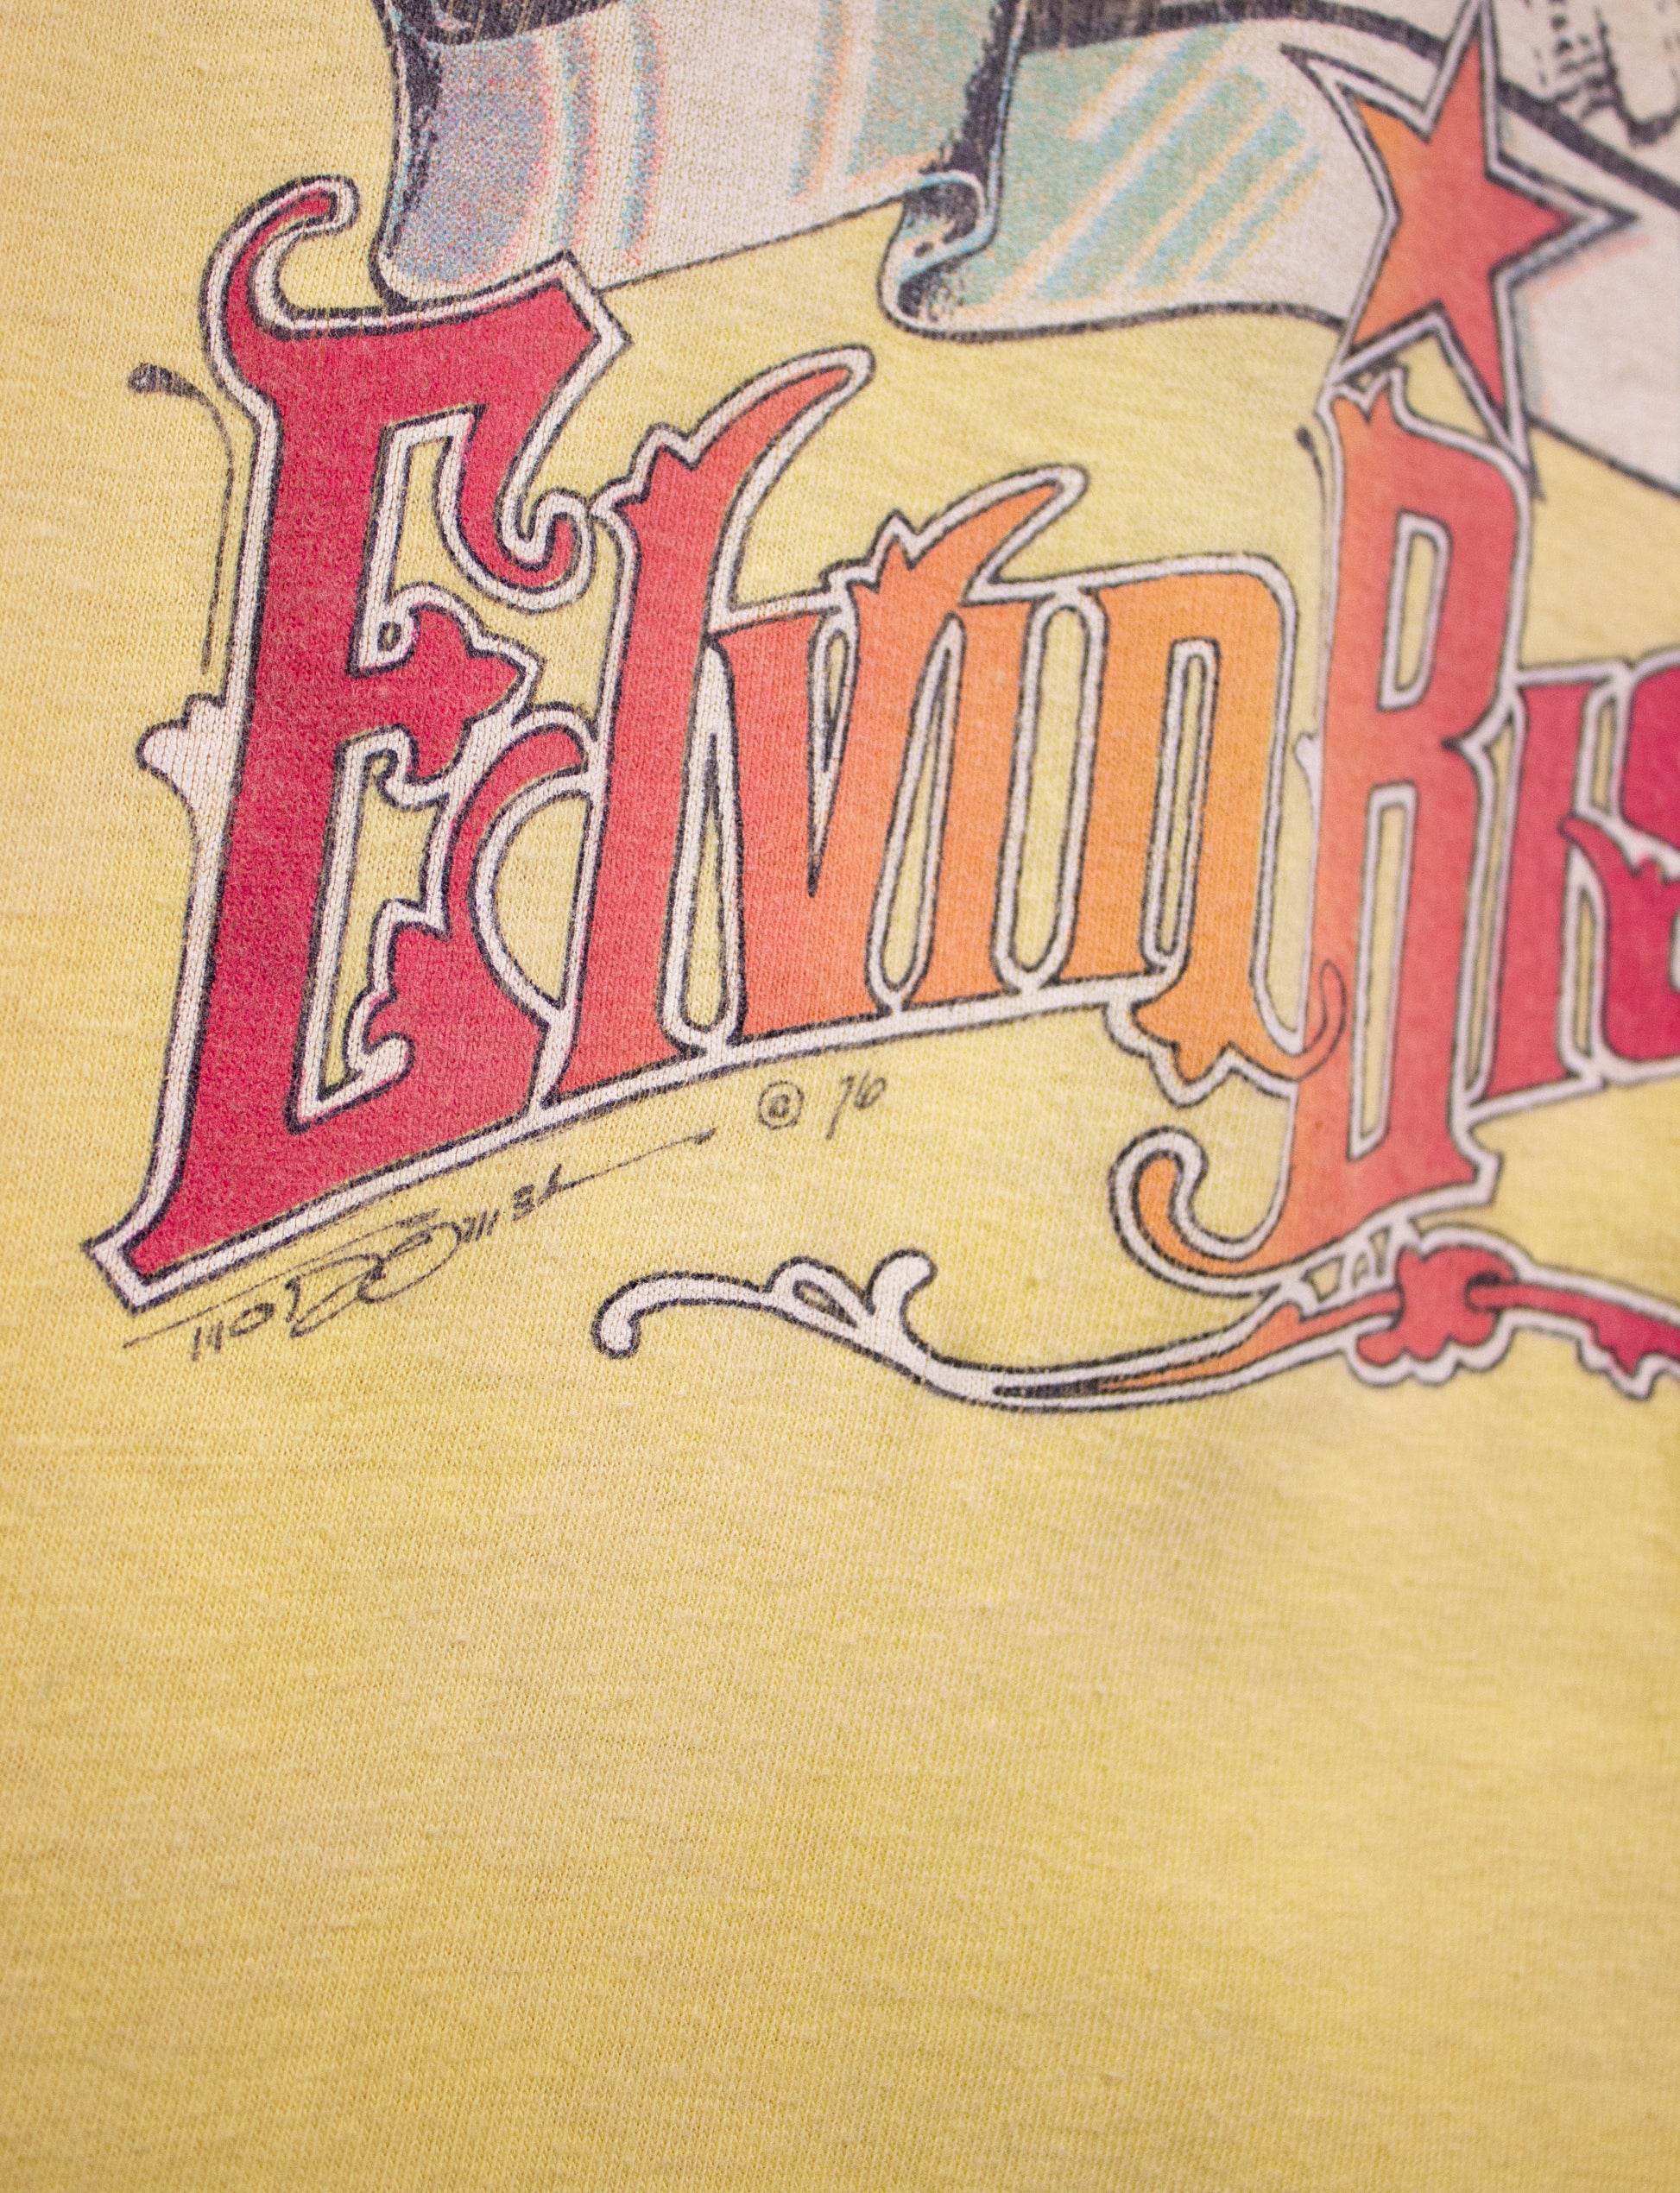 Vintage Elvin Bishop "Struttin' My Stuff" 1976 Concert T Shirt Yellow Small